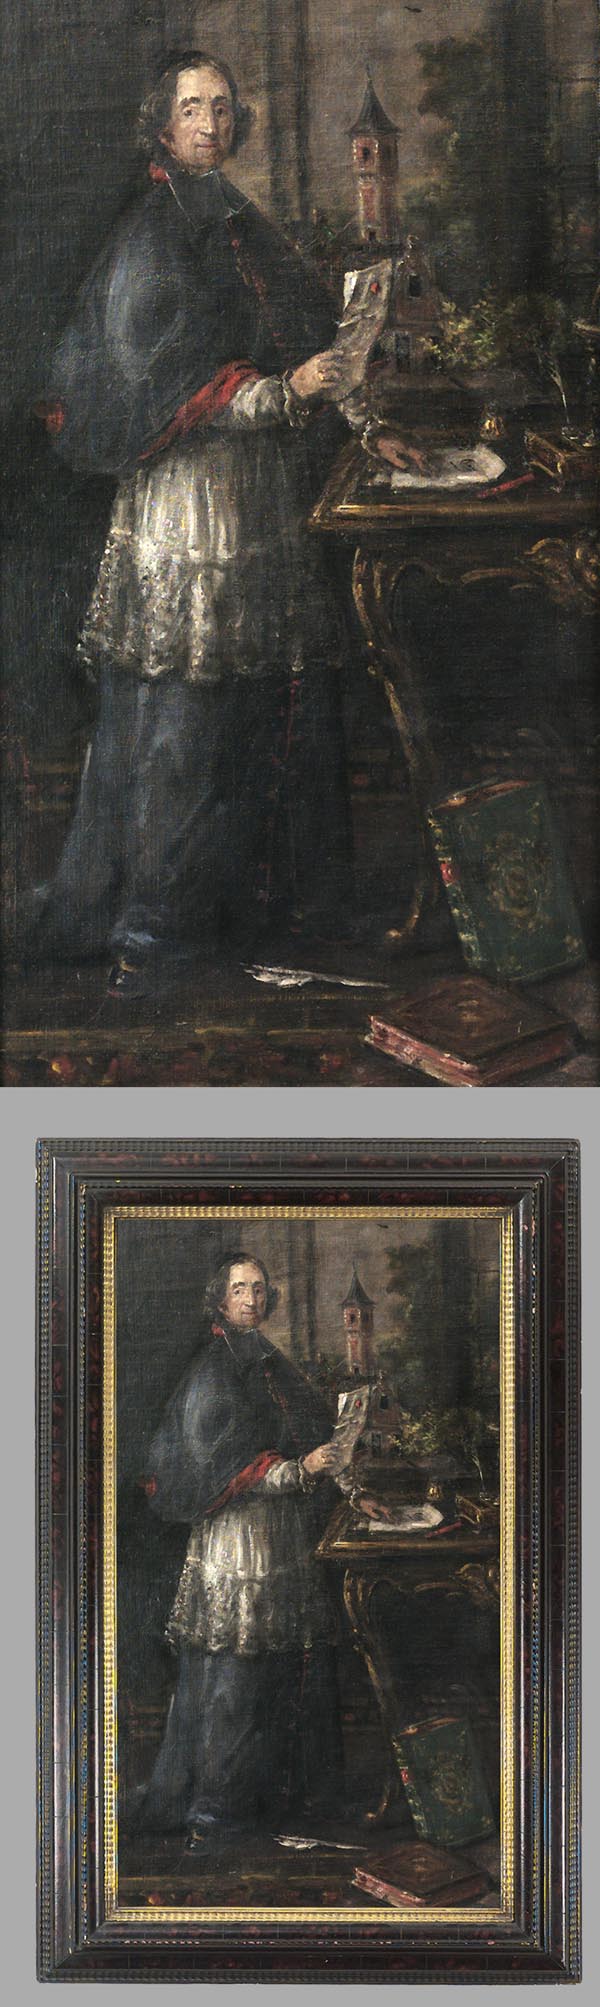 Porträtist 18.Jahrhundert.